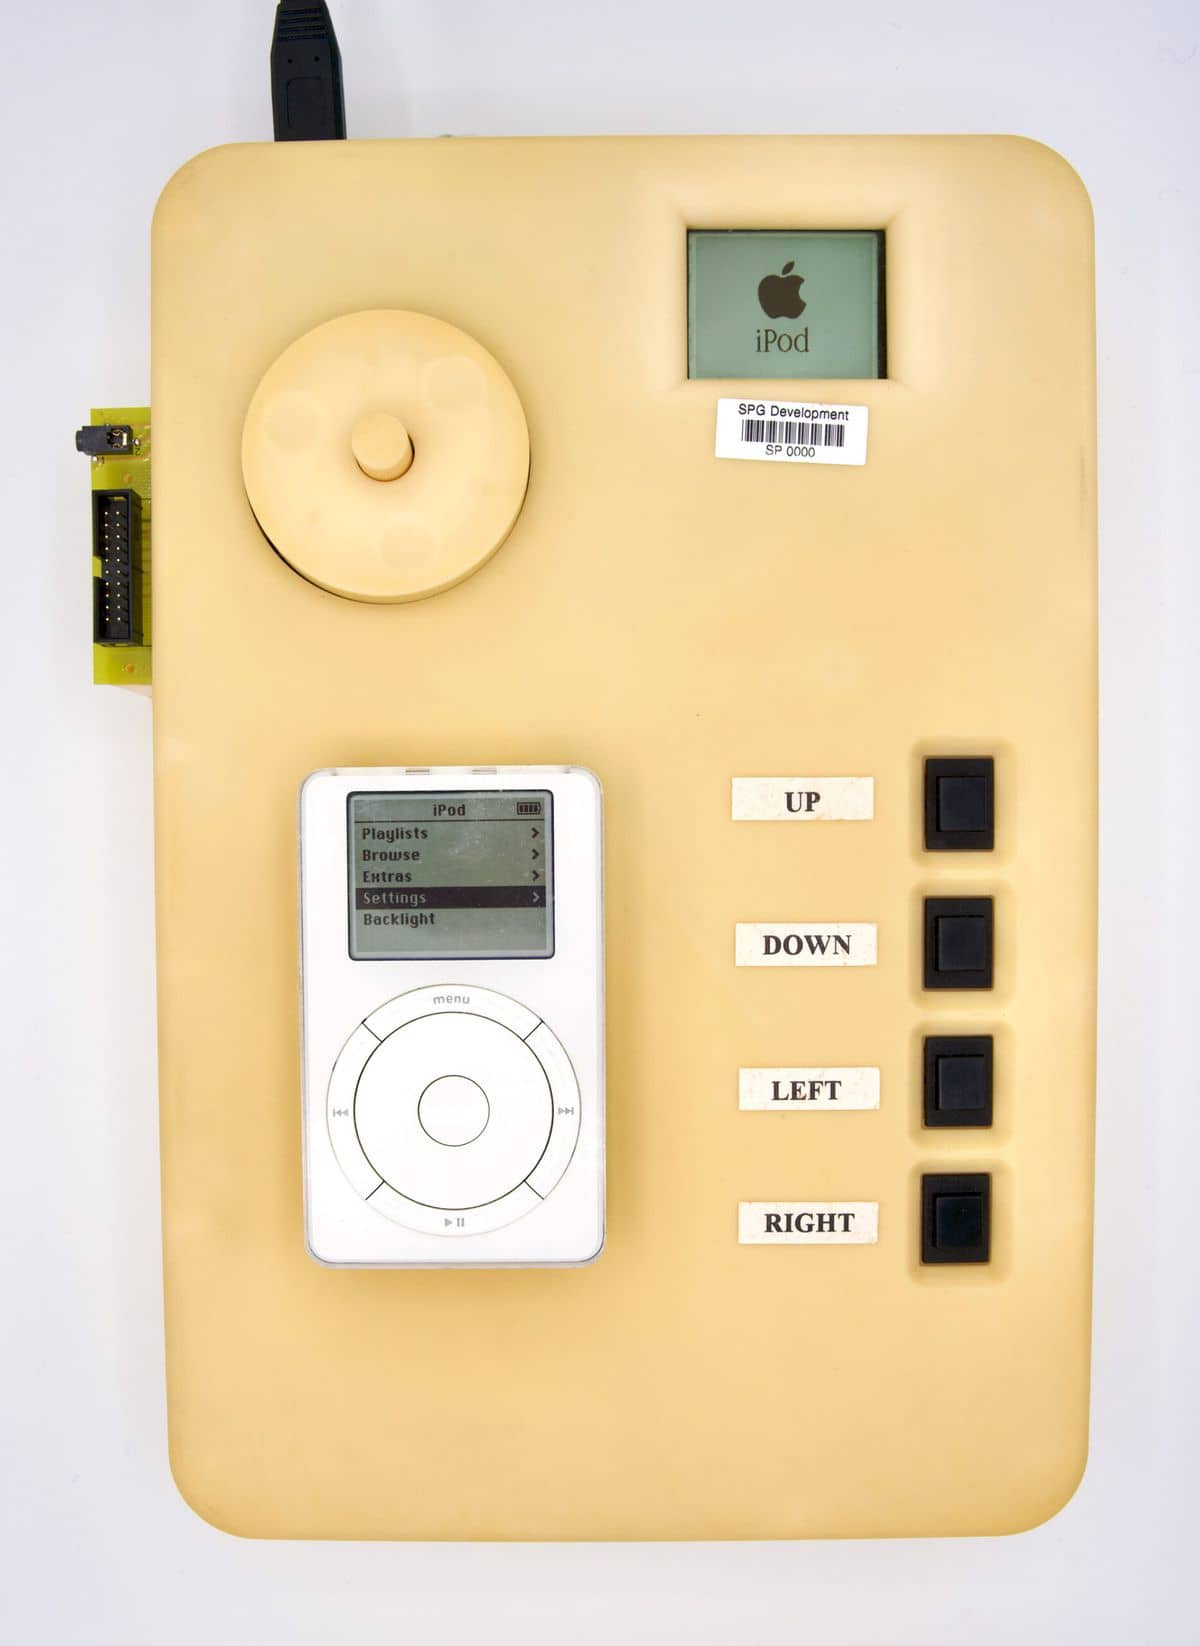 iPod prototype size comparison